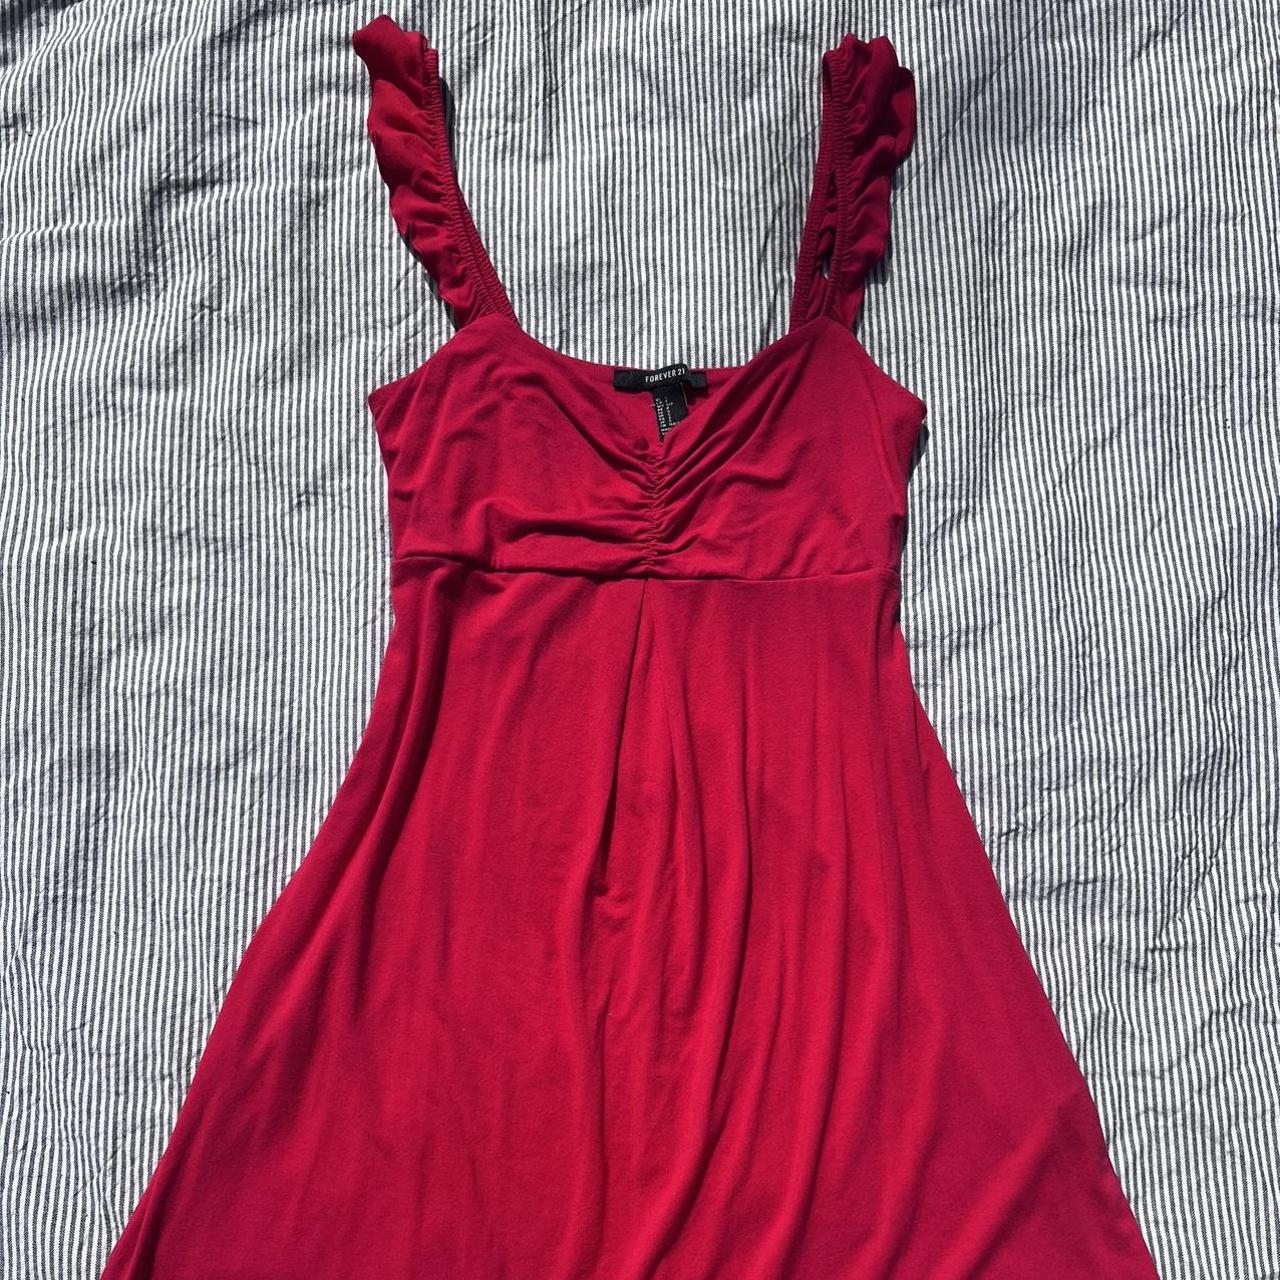 Red dress, long, full length, flowy, comfy, Forever - Depop